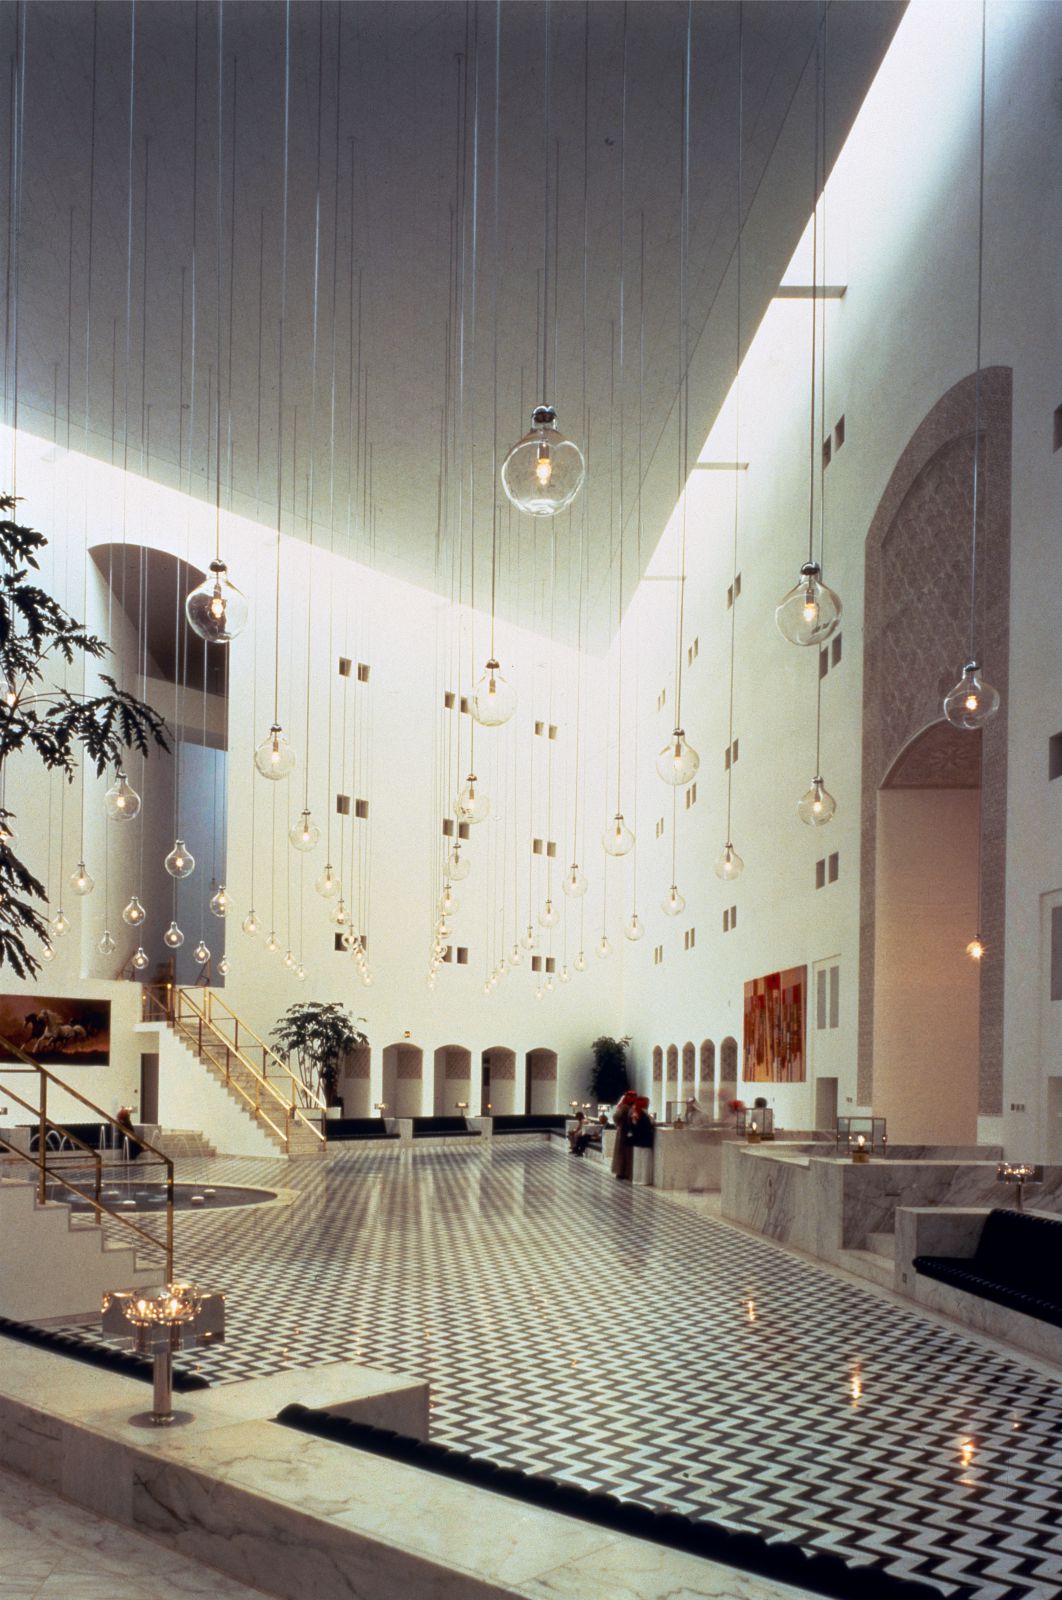 Henning Larsen Prize for Architecture